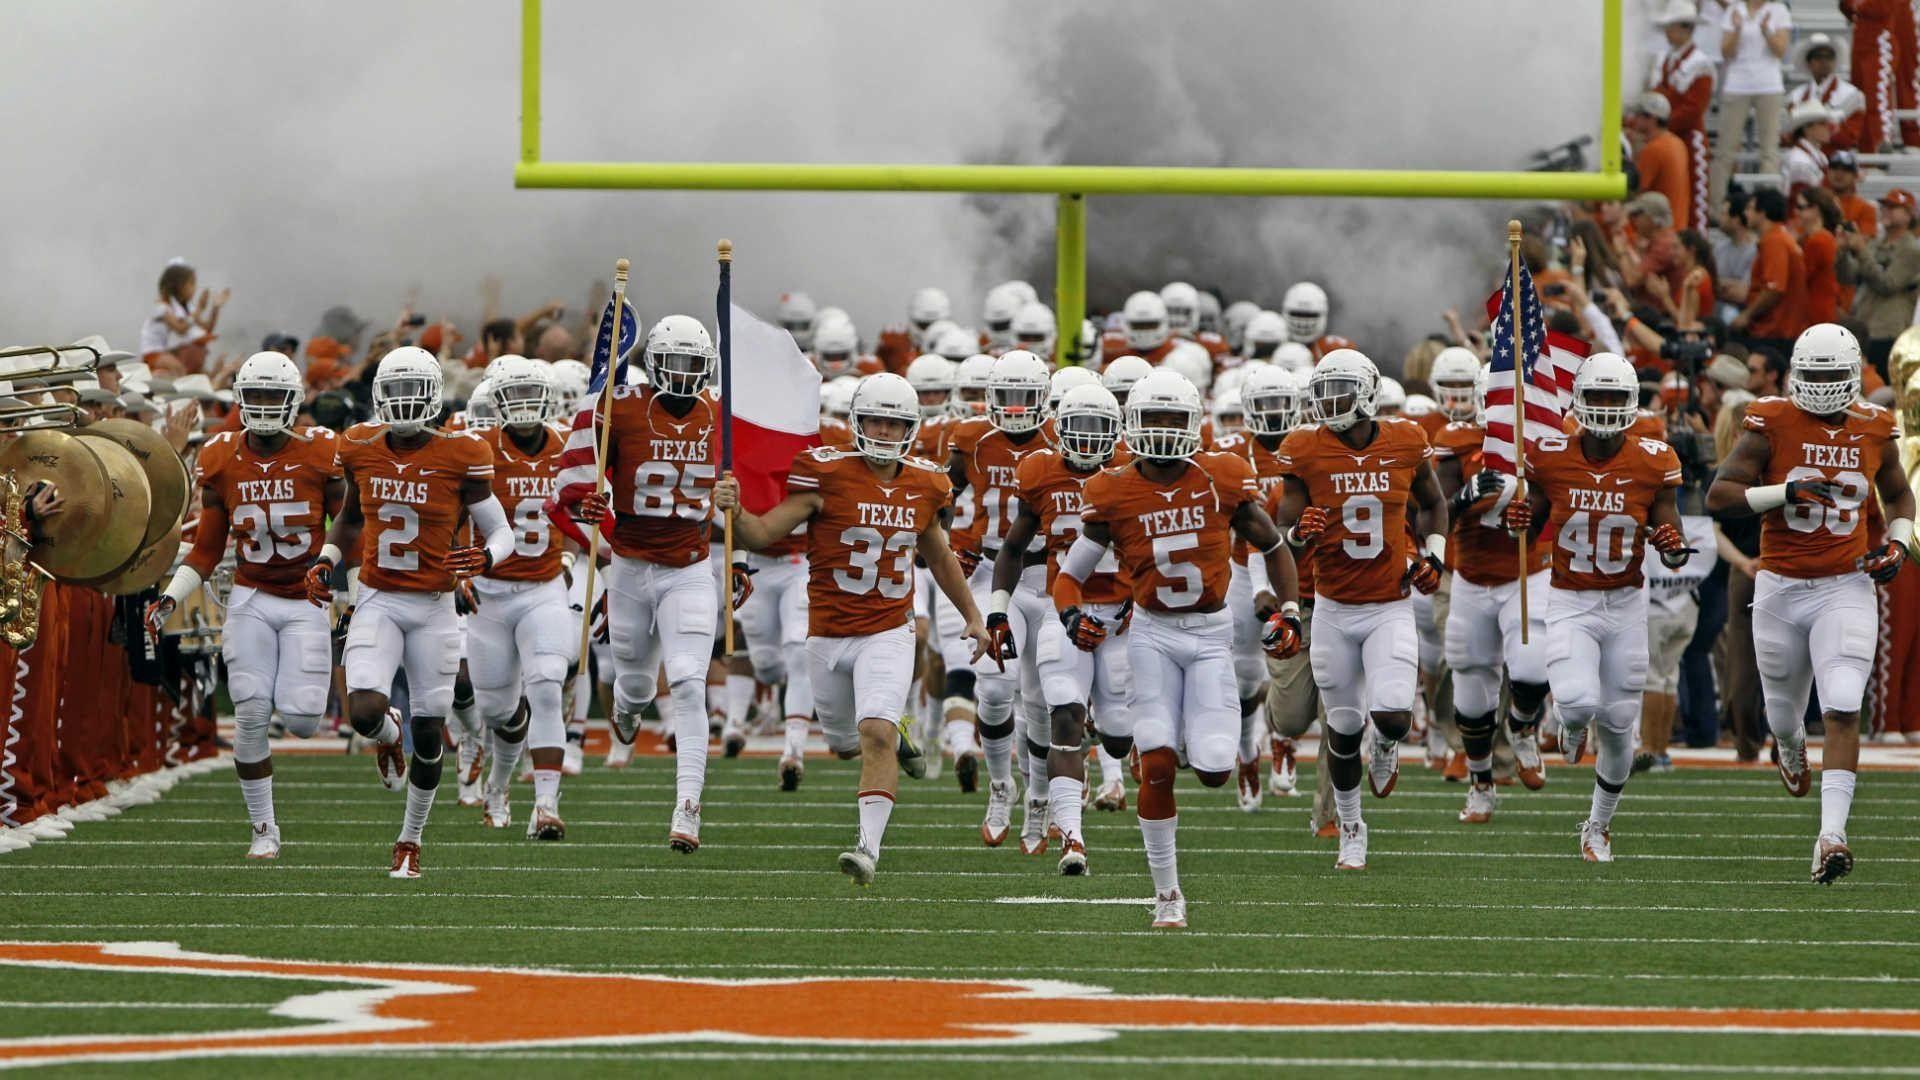 Texas Longhorns Football. Beautiful image HD Picture & Desktop